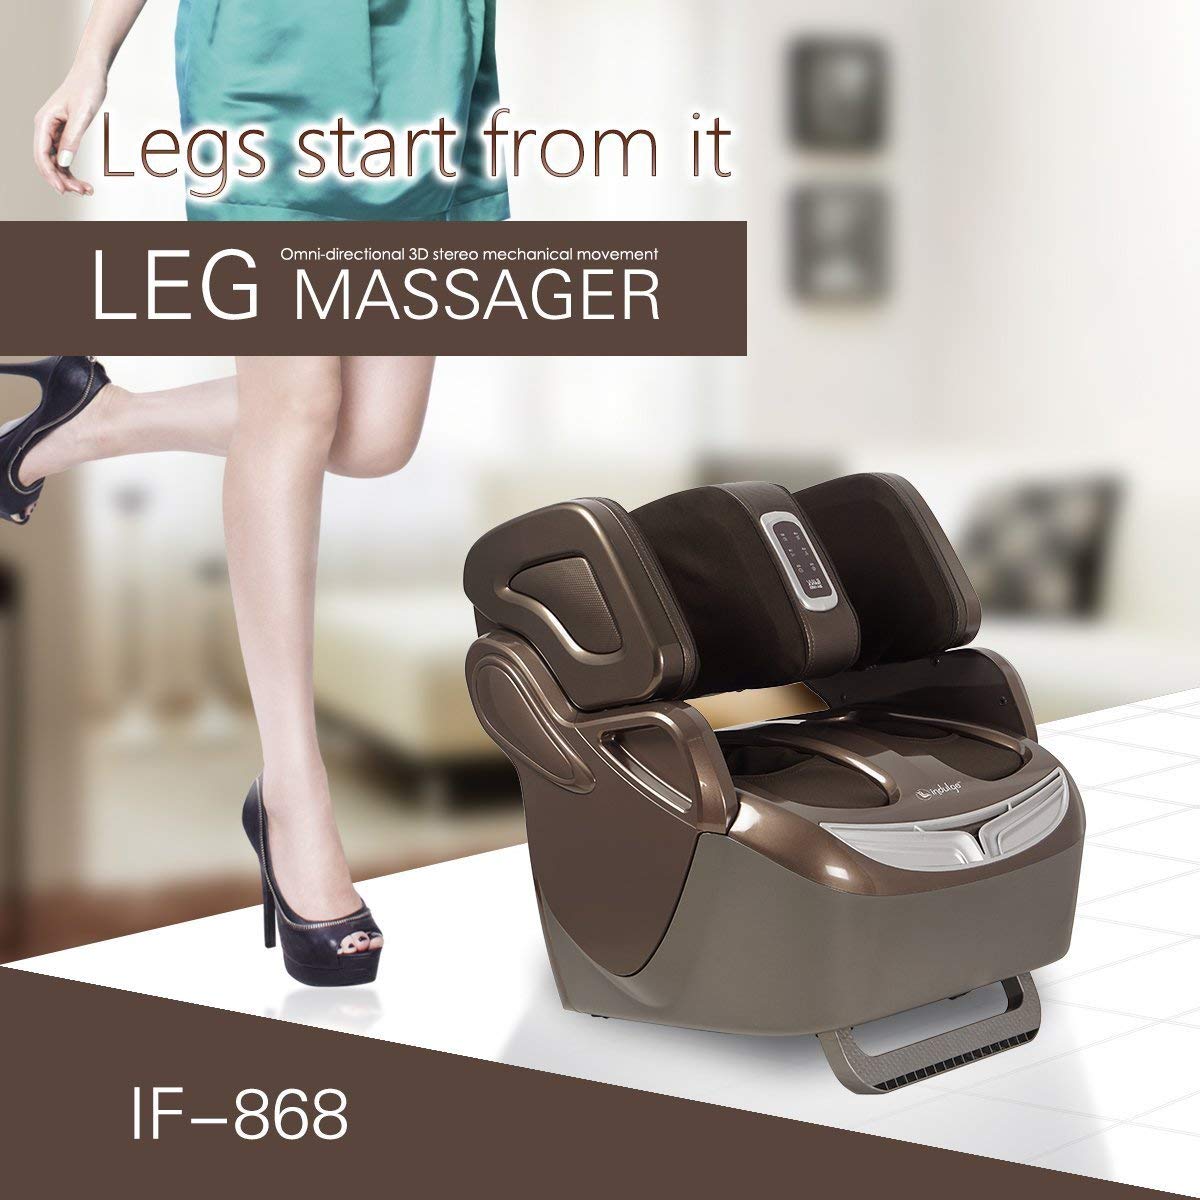 Indulge IF-868 Leg Massager